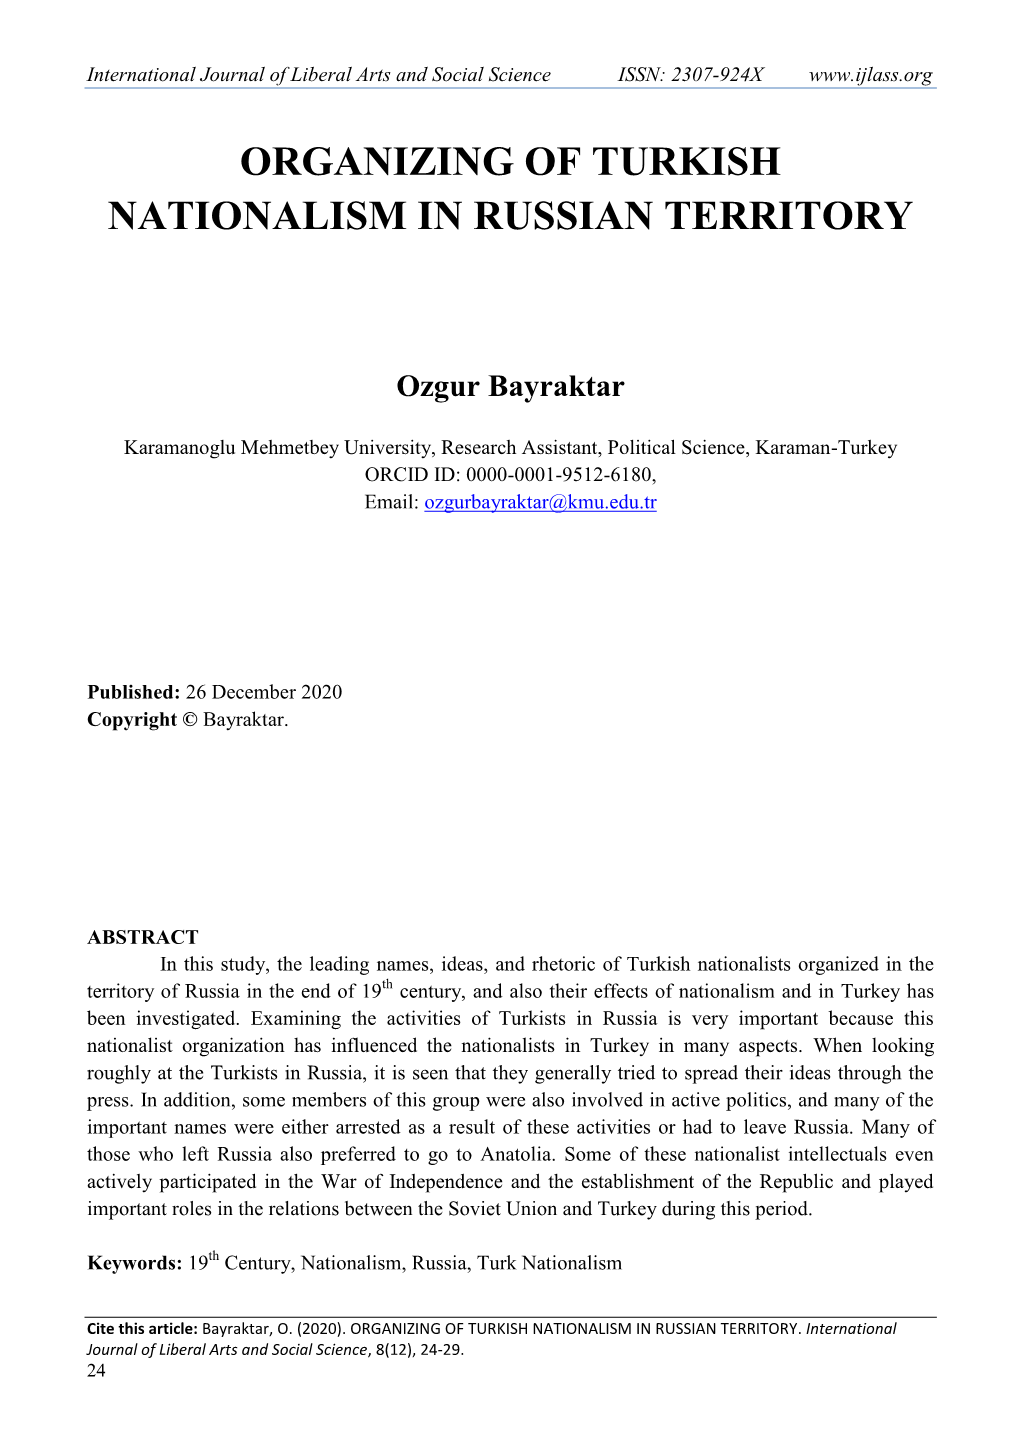 Organizing of Turkish Nationalism in Russian Territory